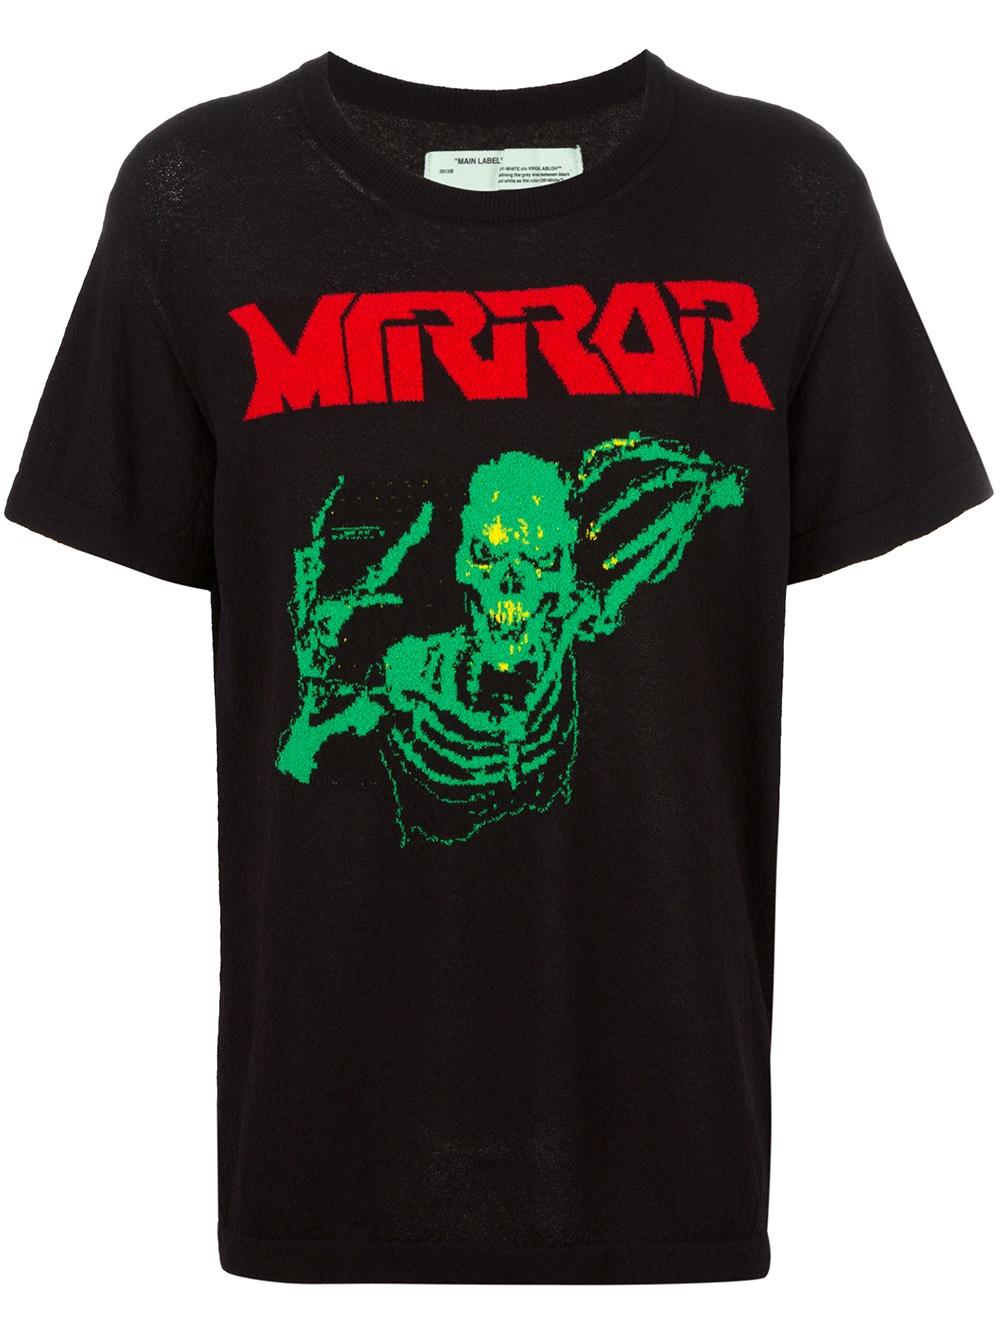 Off-White \'Mirror\' T-shirt black multicolor Men Clothing T-Shirts